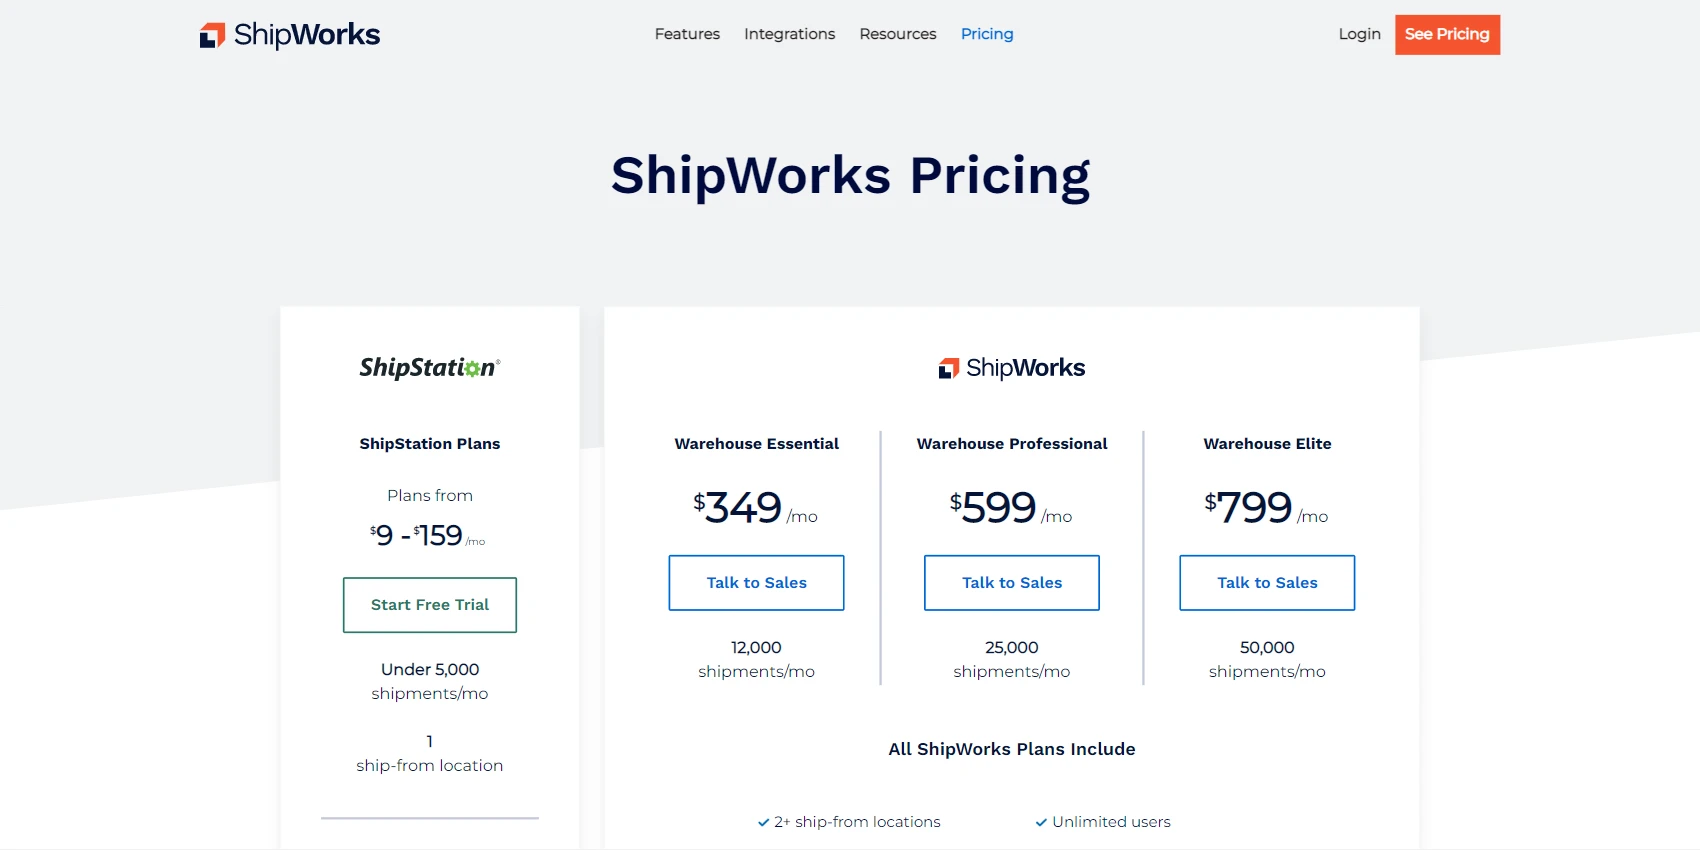 4. ShipWorks Pricing